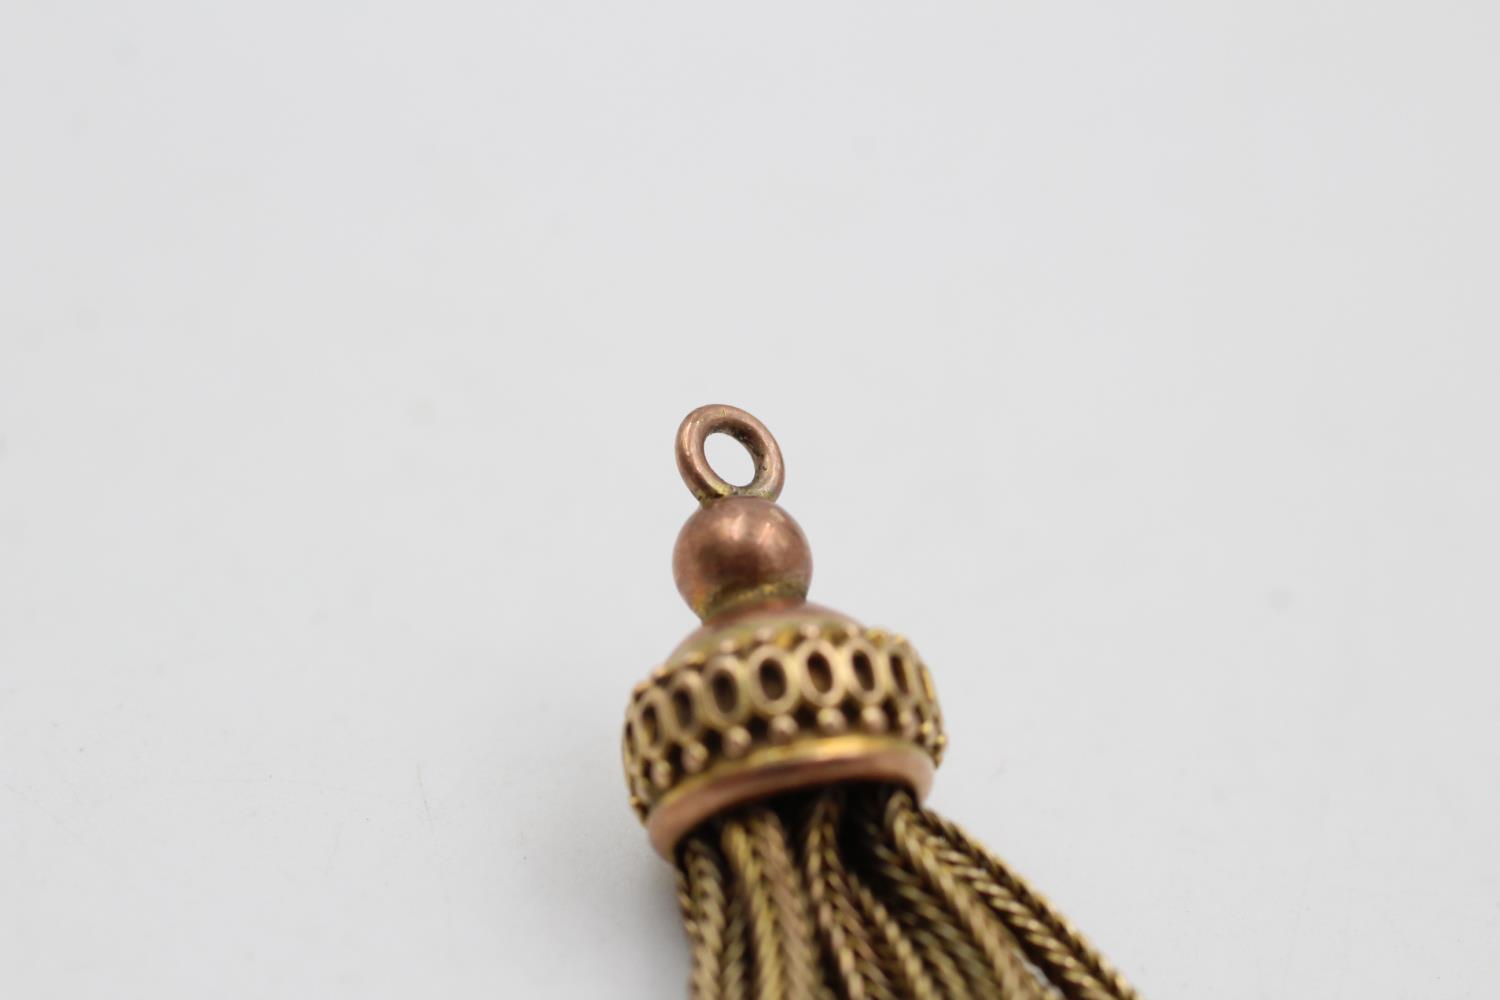 10ct gold antique tassel pendant charm 2.9 grams gross - Image 2 of 4